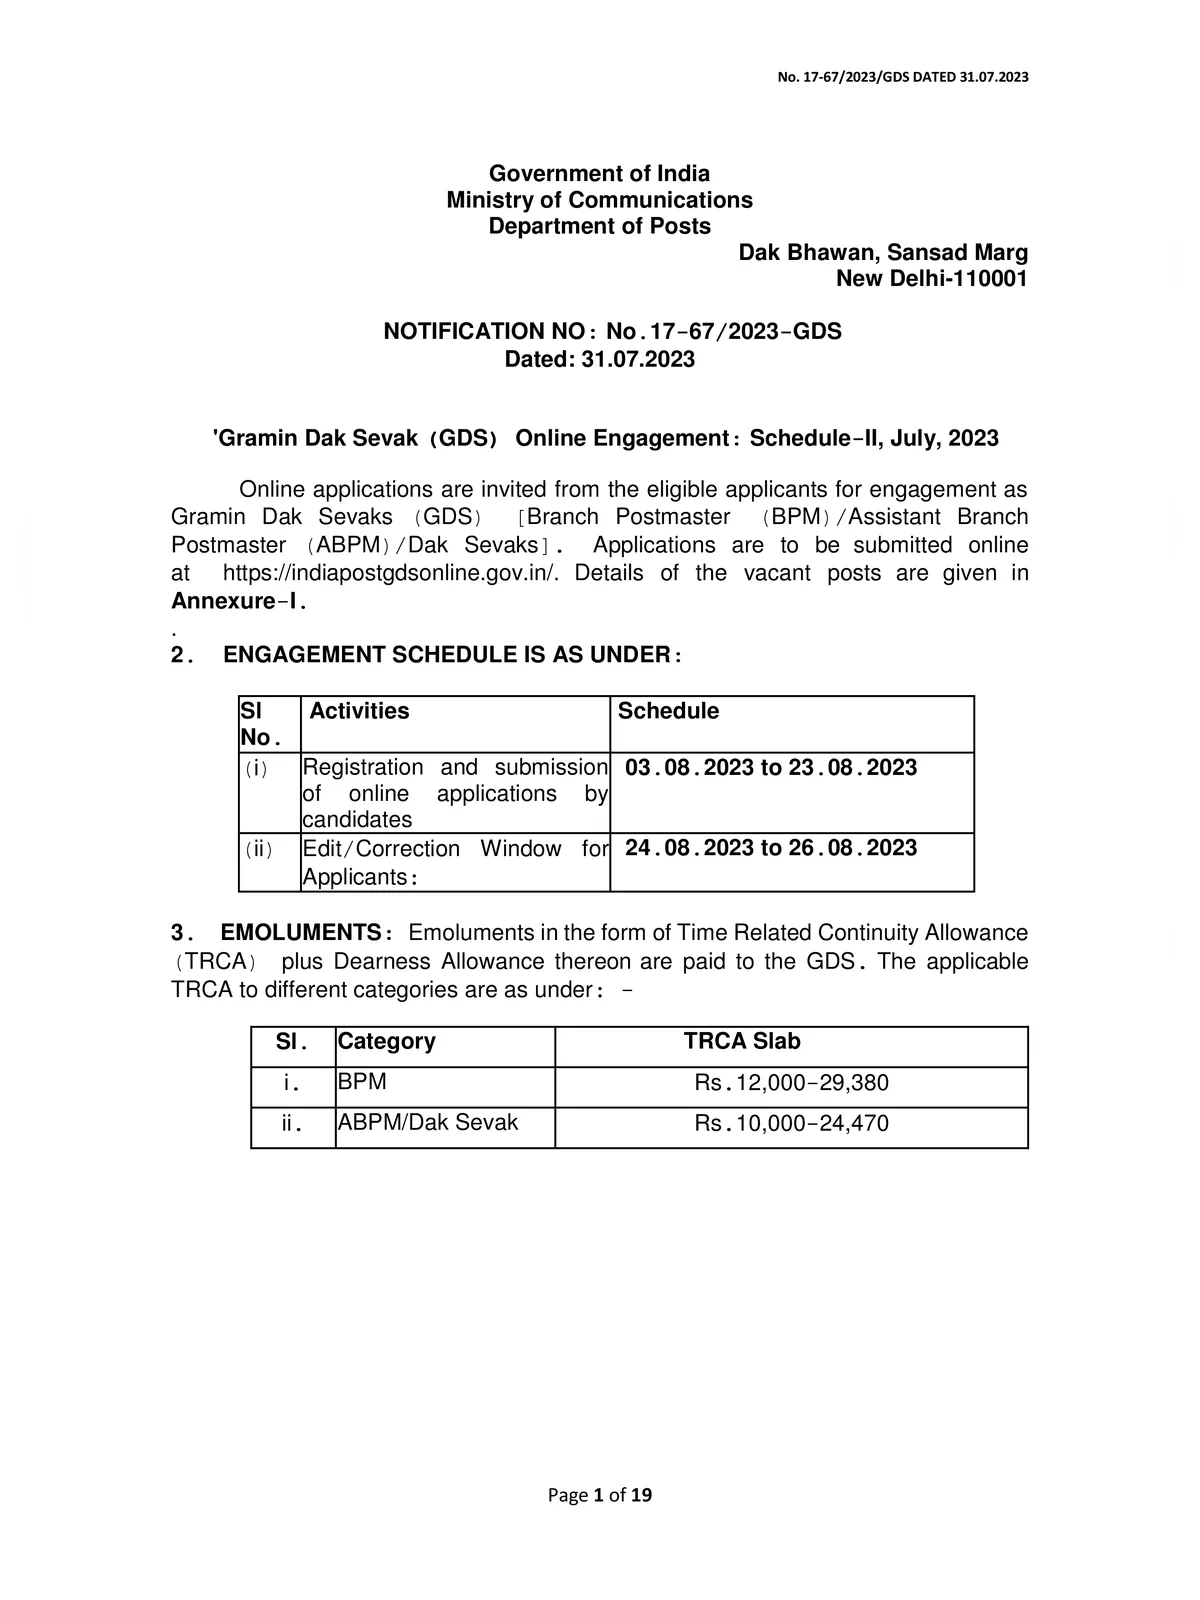 India Post GDS Recruitment Notification 2023